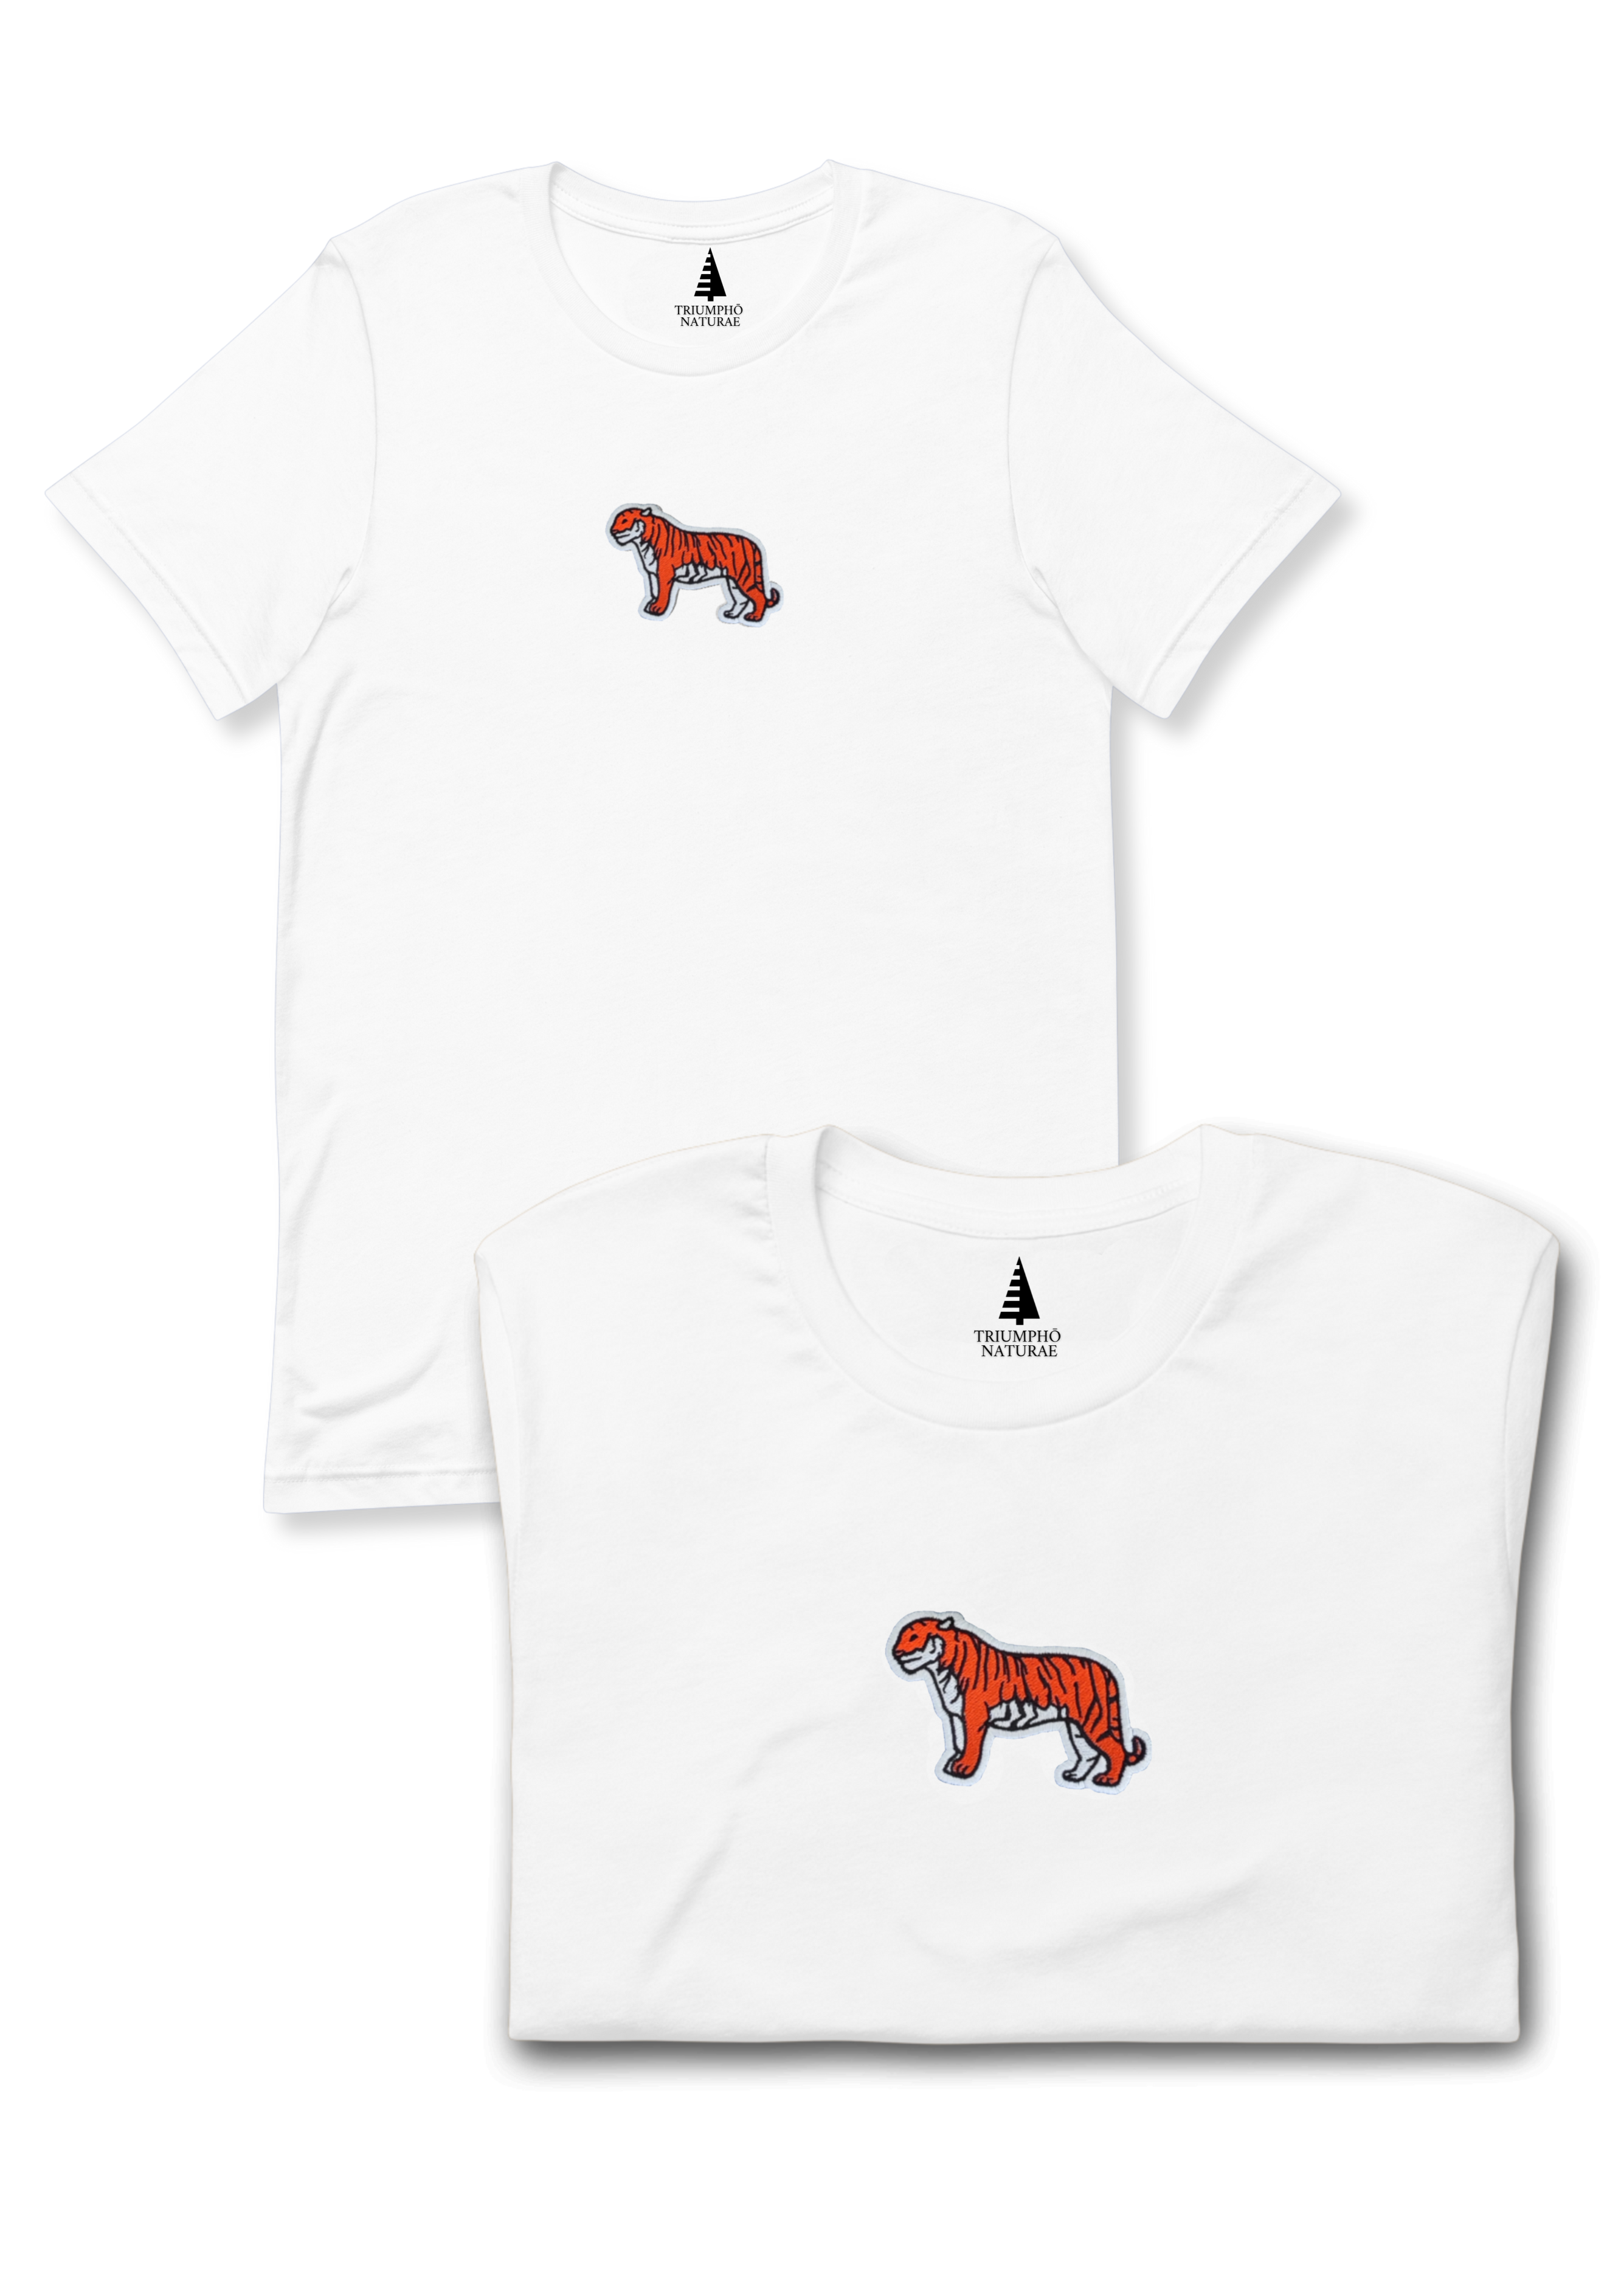 Amur tiger unisex t-shirt